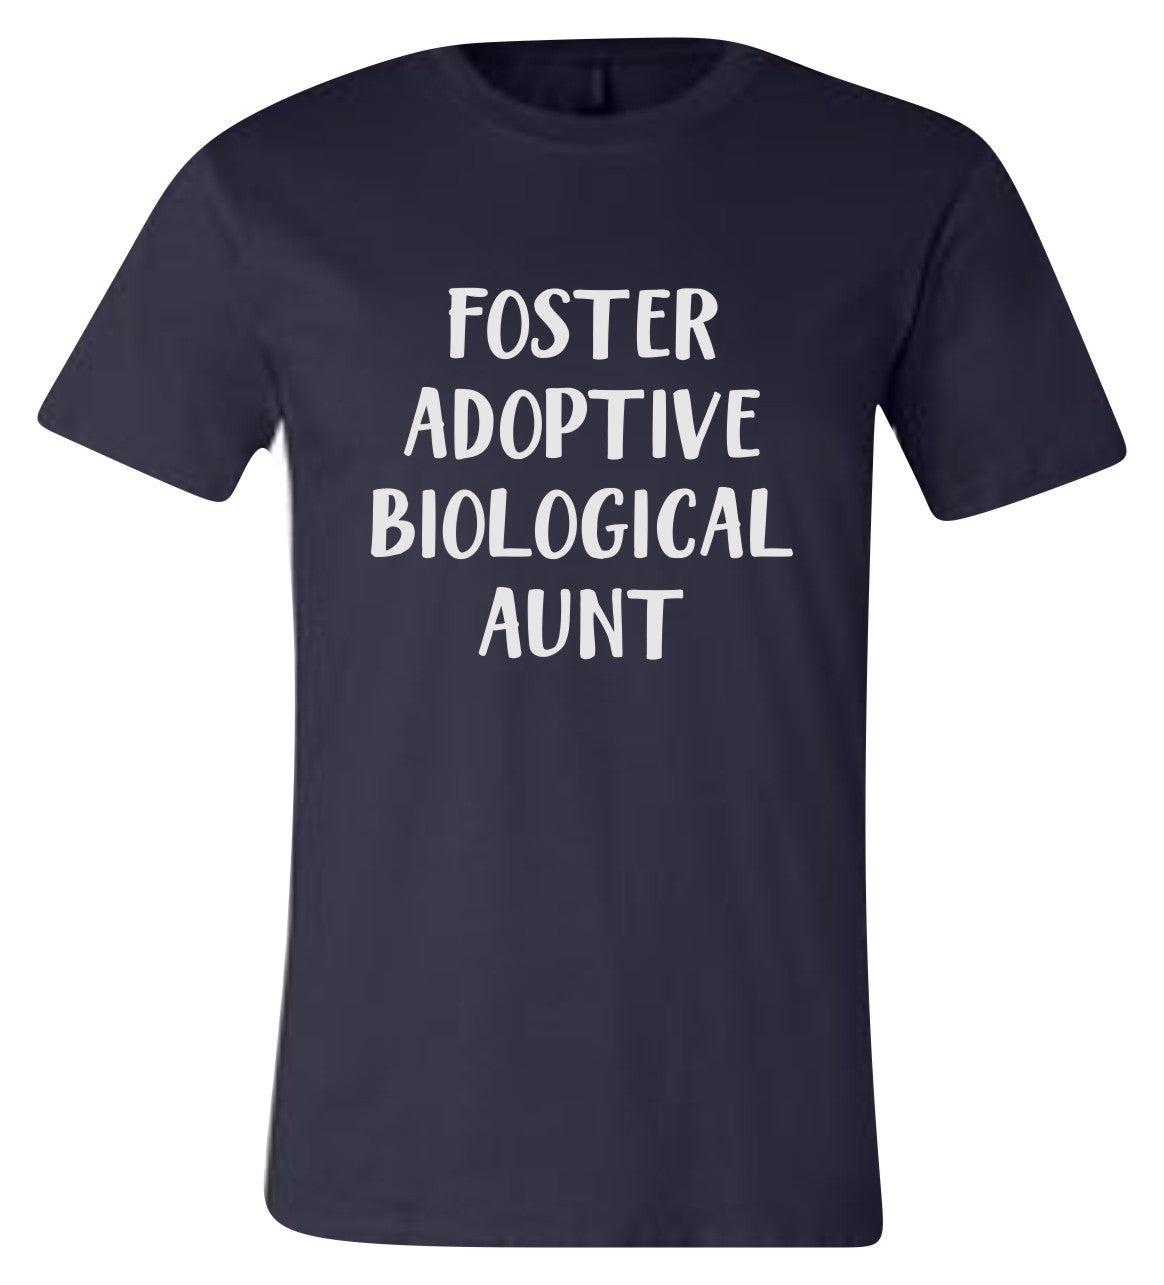 Foster, Adoptive, Biological Mother, Grandmother, Aunt etc Short-Sleeve Graphic T-shirt